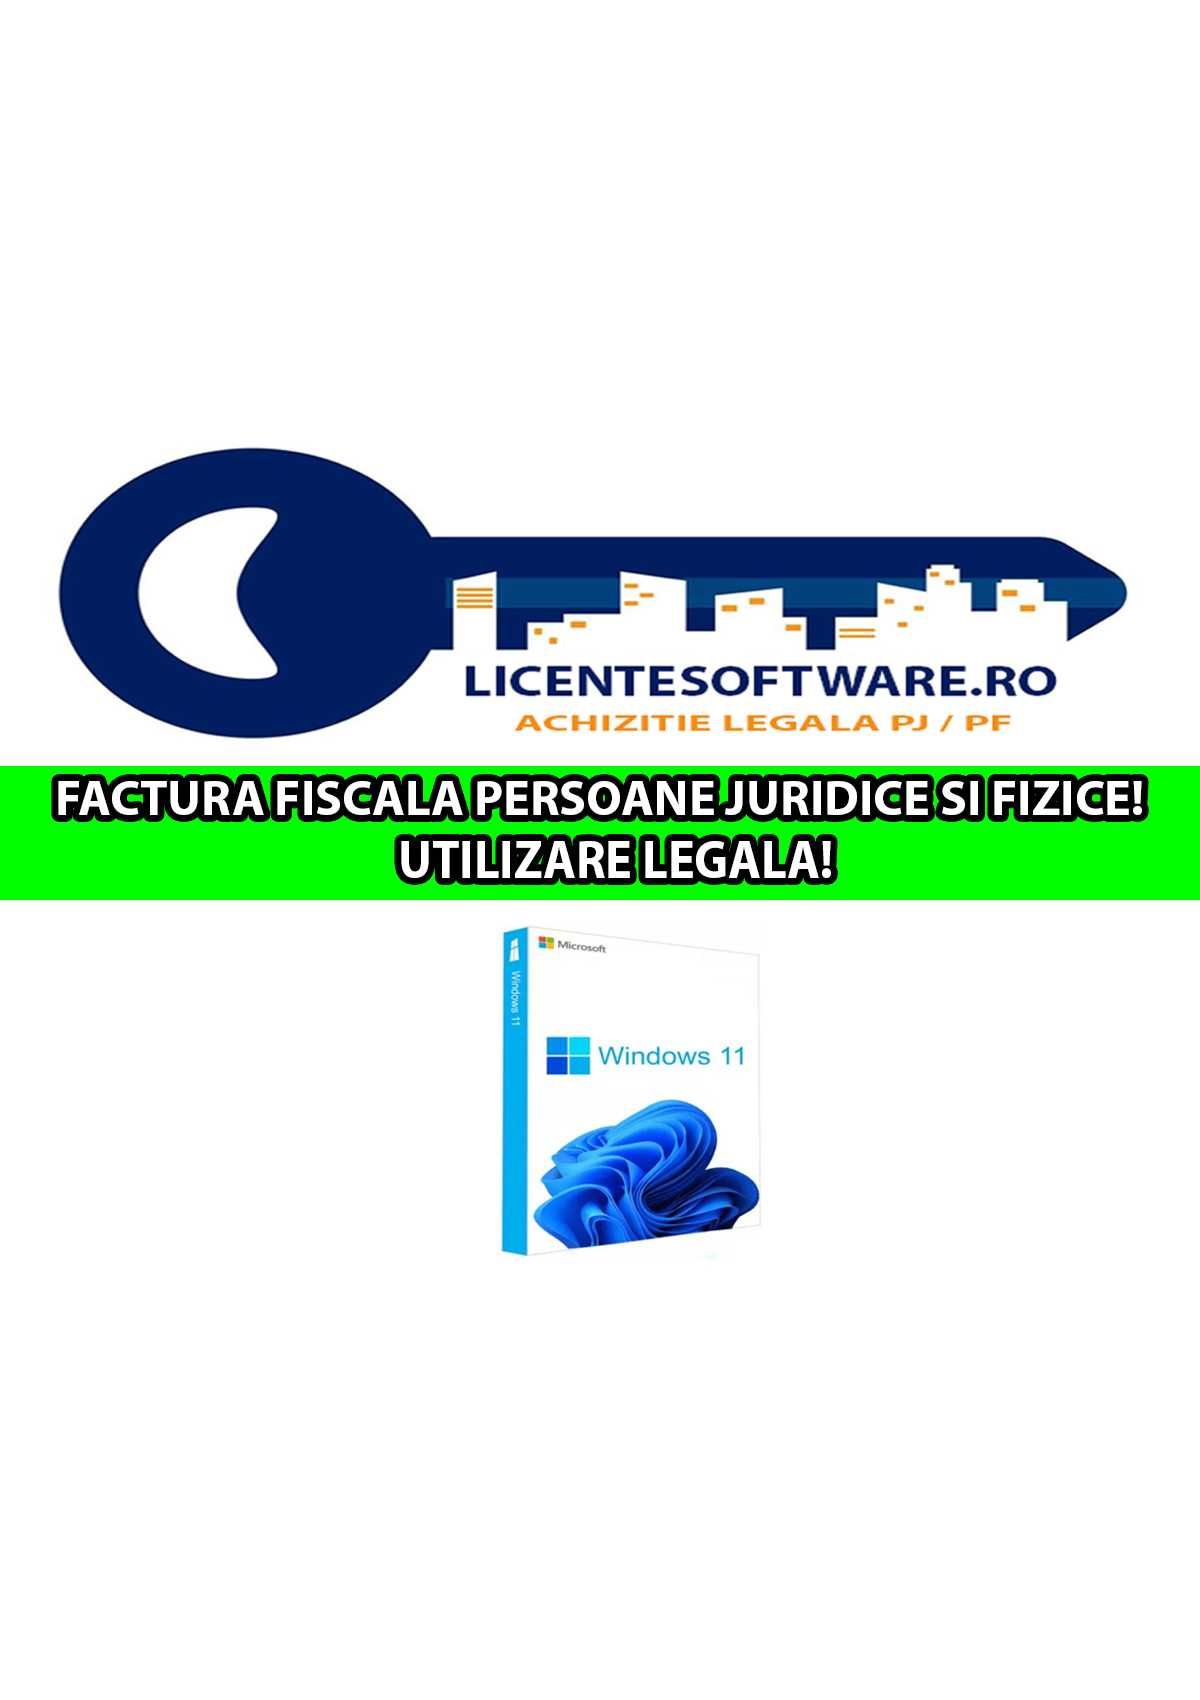 Licente 100% Retail: Windows 11 PRO / HOME - Legal!